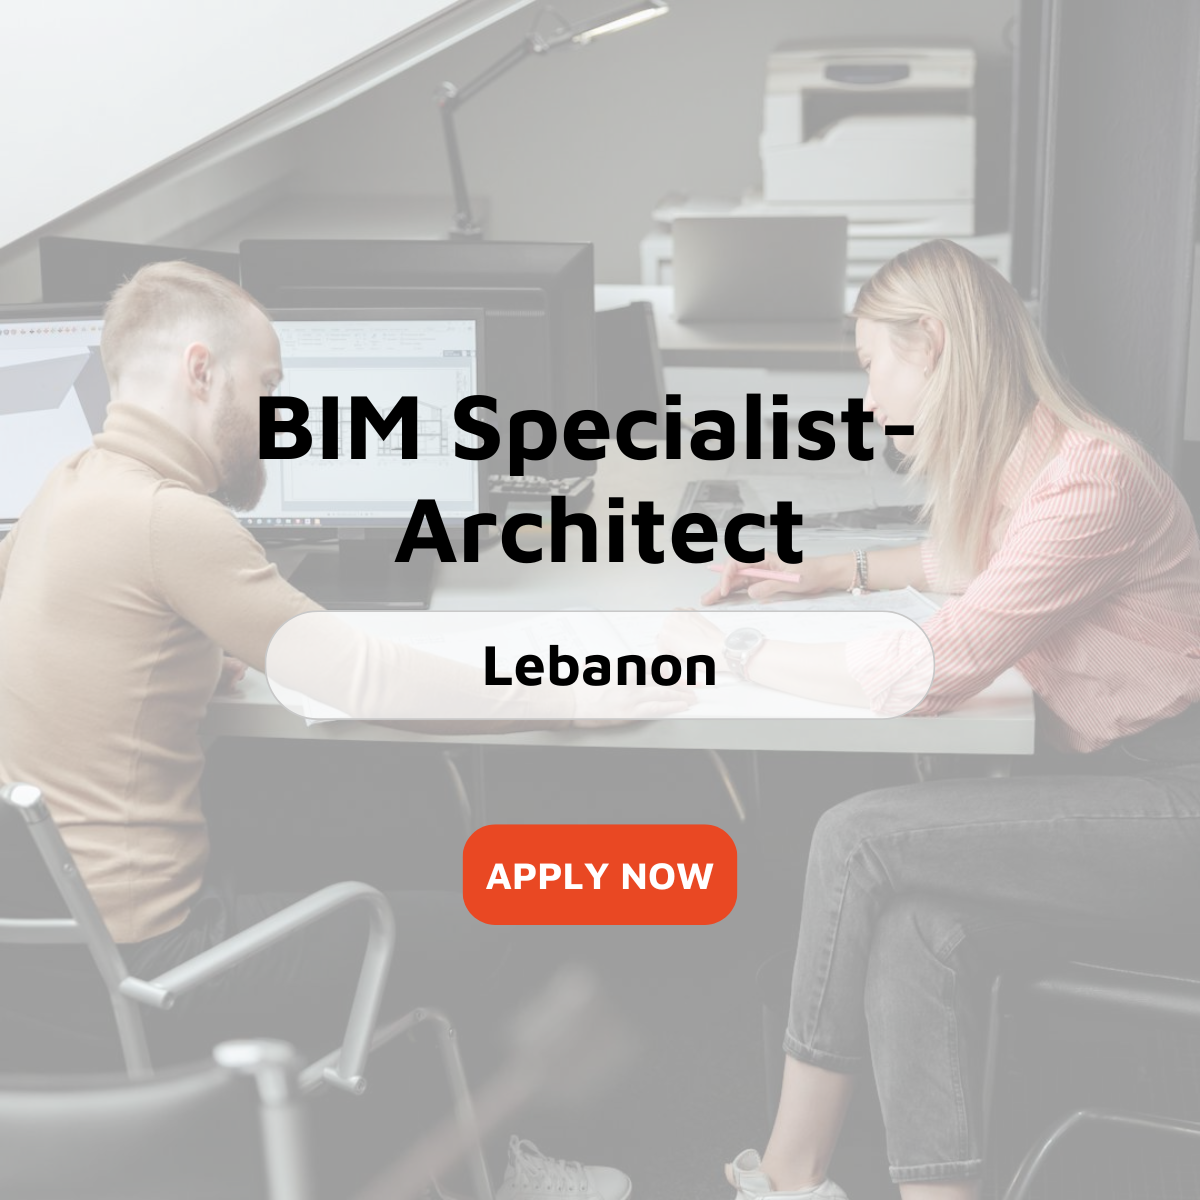 BIM Specialist - Architect